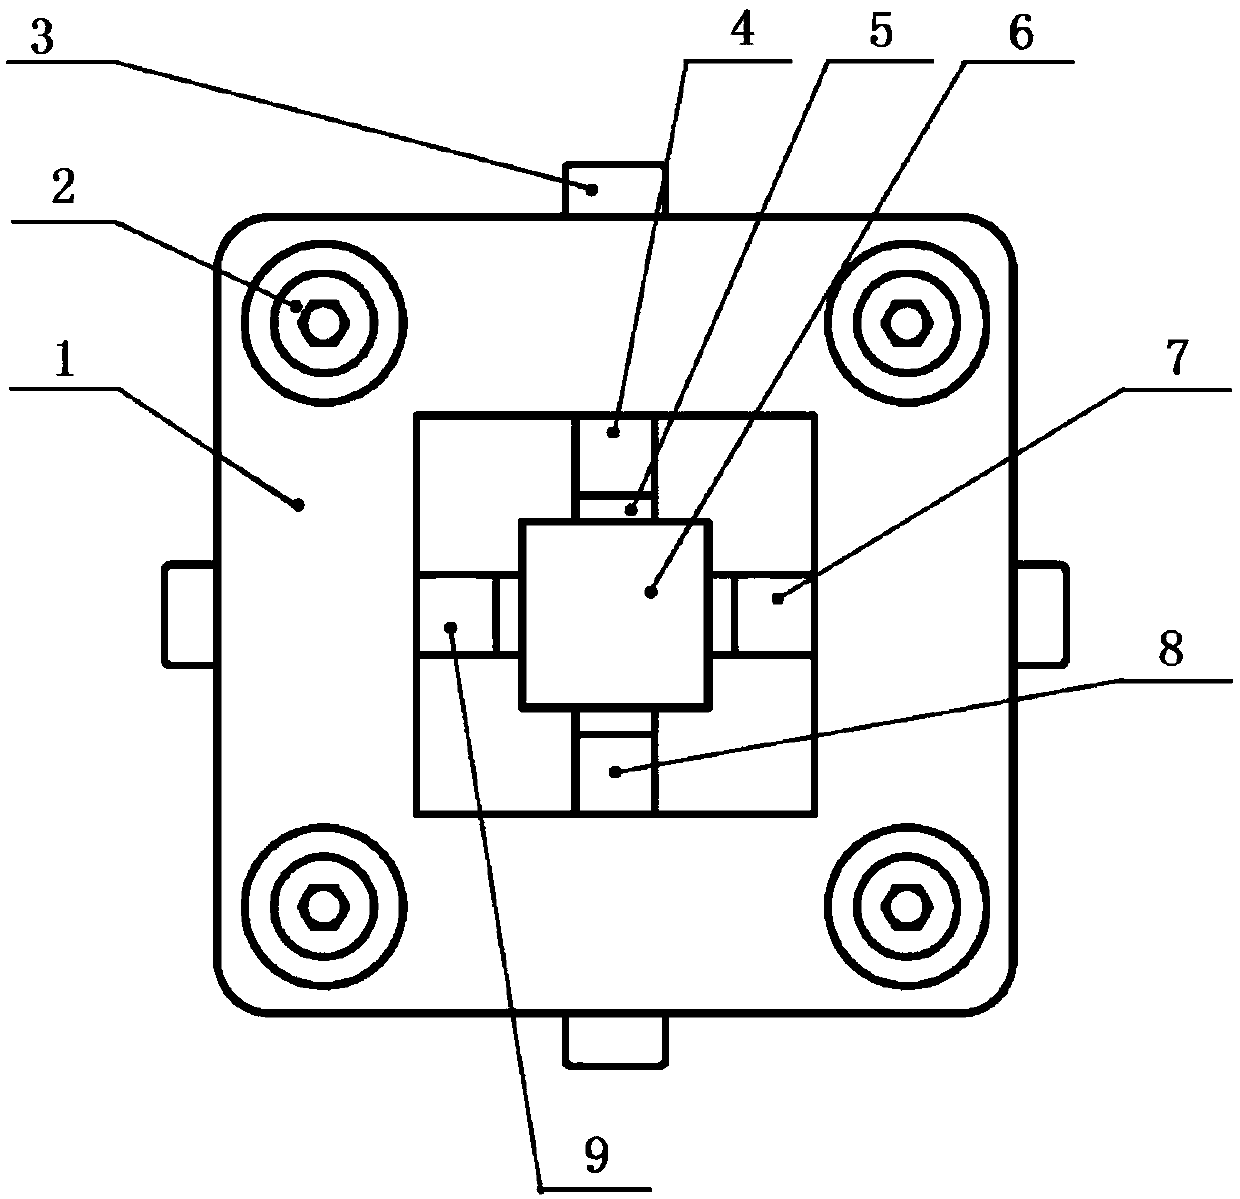 Two-dimensional ultrasonic vibration platform for micro-nano machining